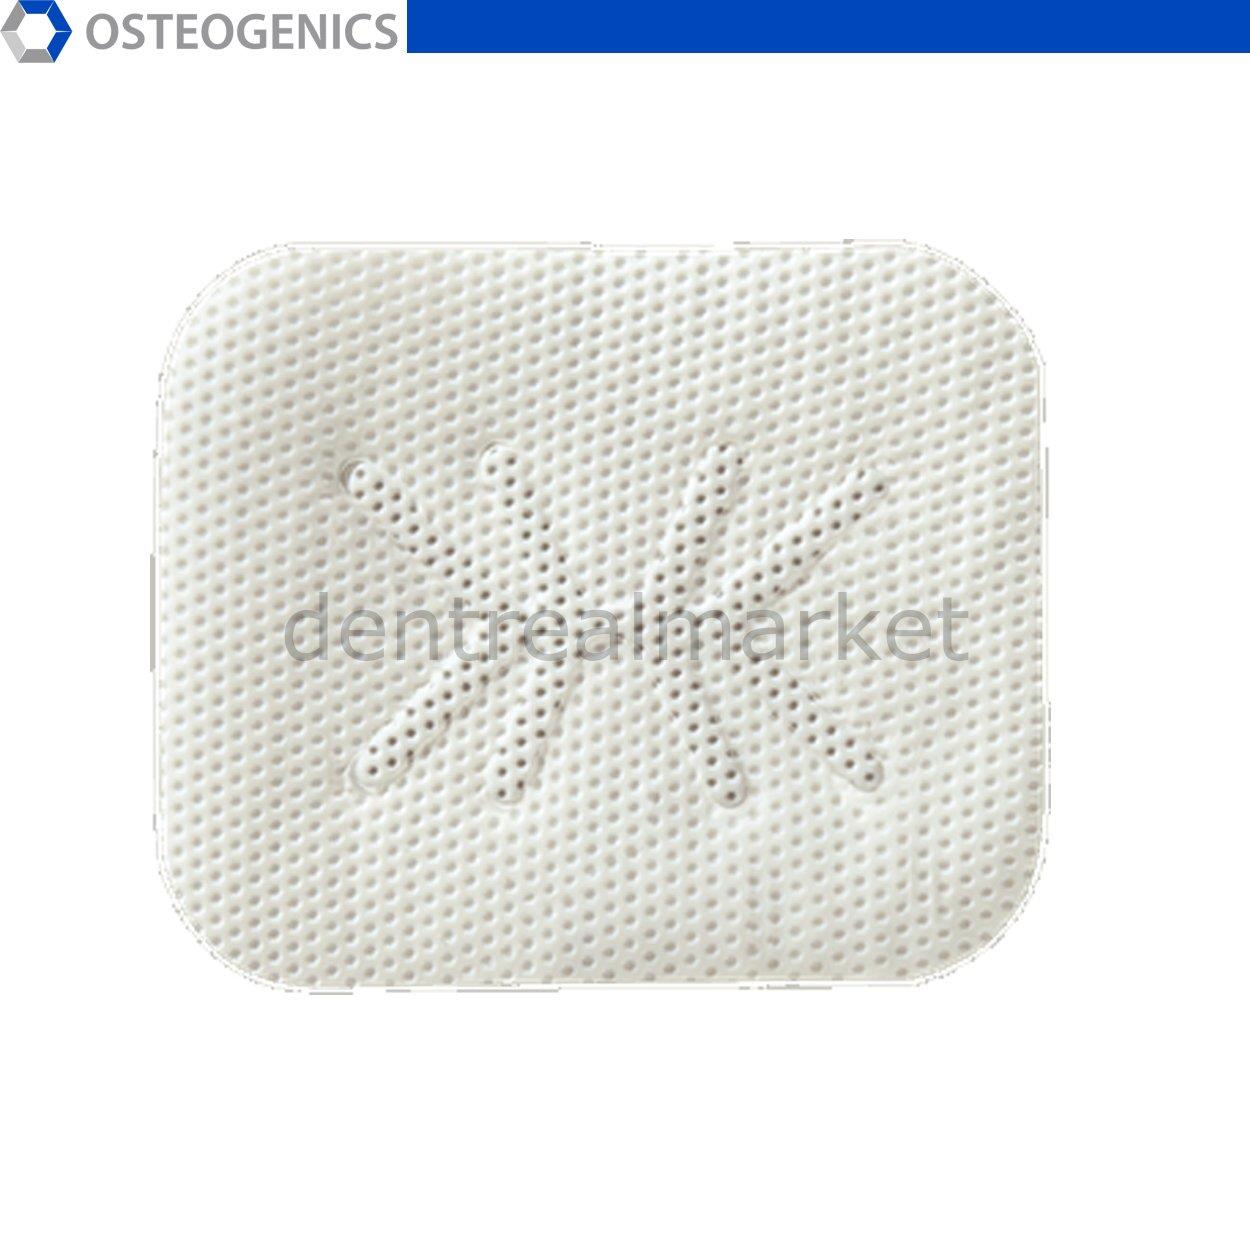 DentrealStore - Osteogenics Cytoplast Titanium-Reinforced Non- Posterior Large 25*30 mm